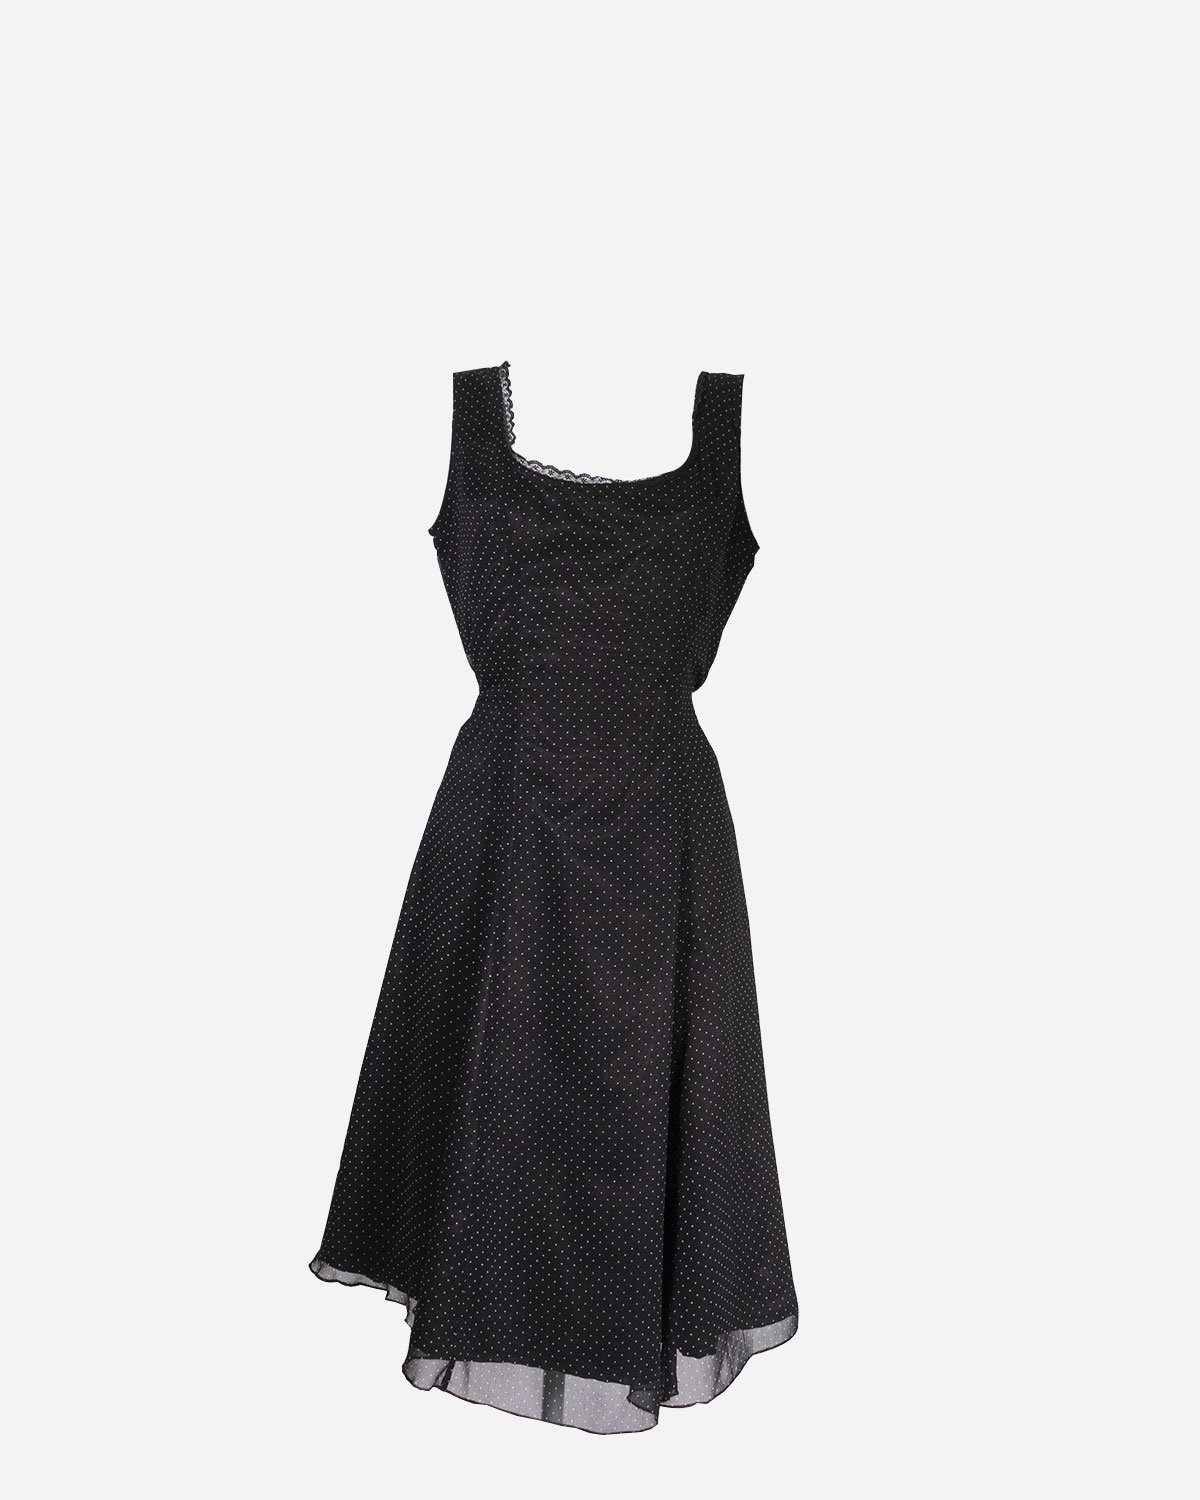 Women’s polka dot patterned summer dresses: 4 pieces